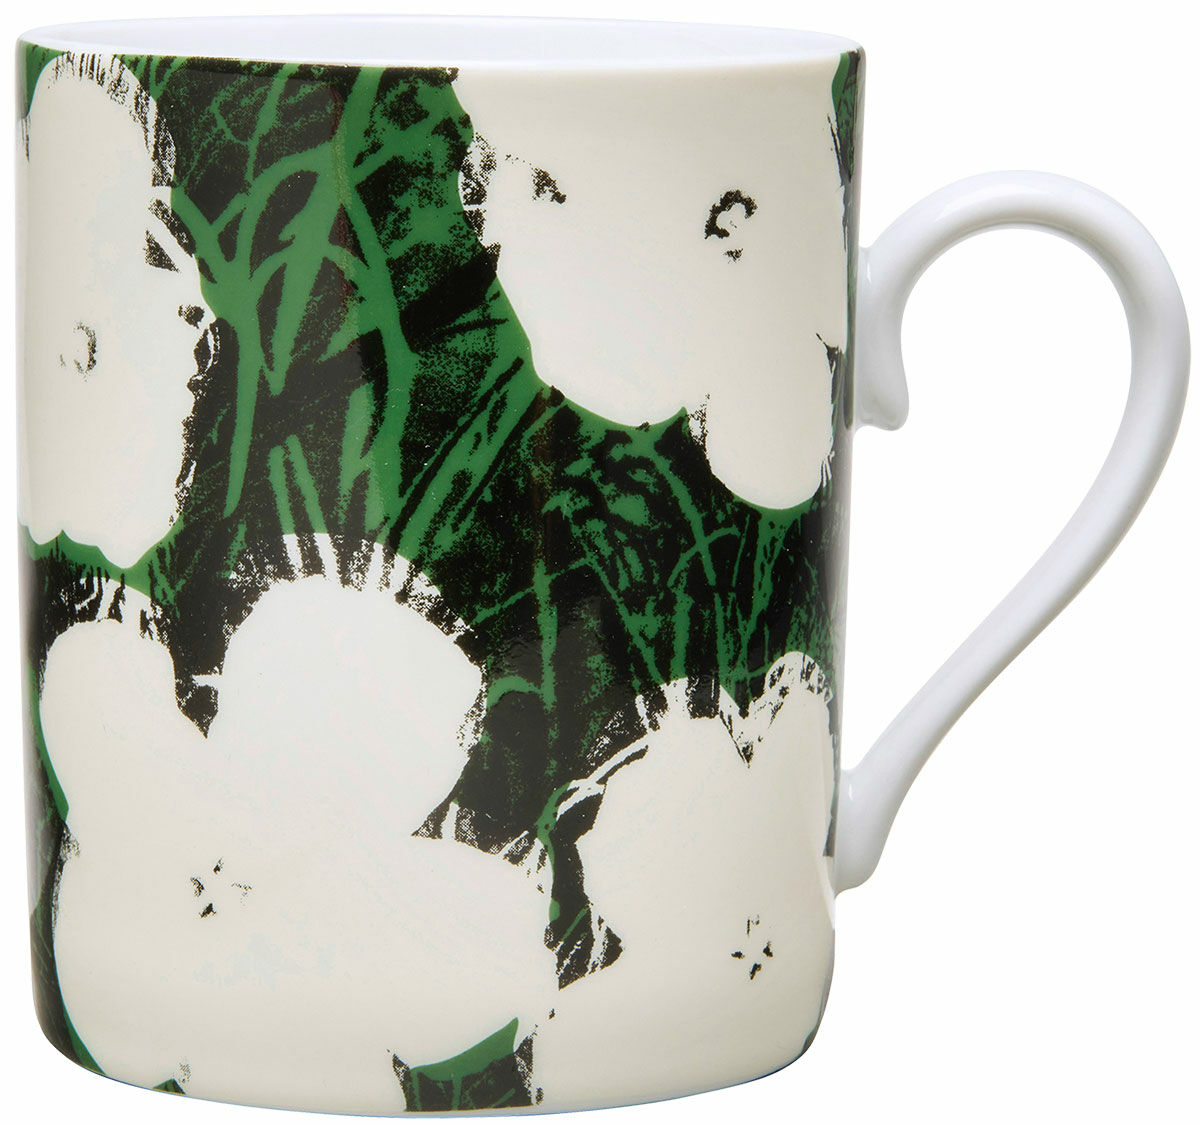 Mug "White Flower", porcelain by Andy Warhol